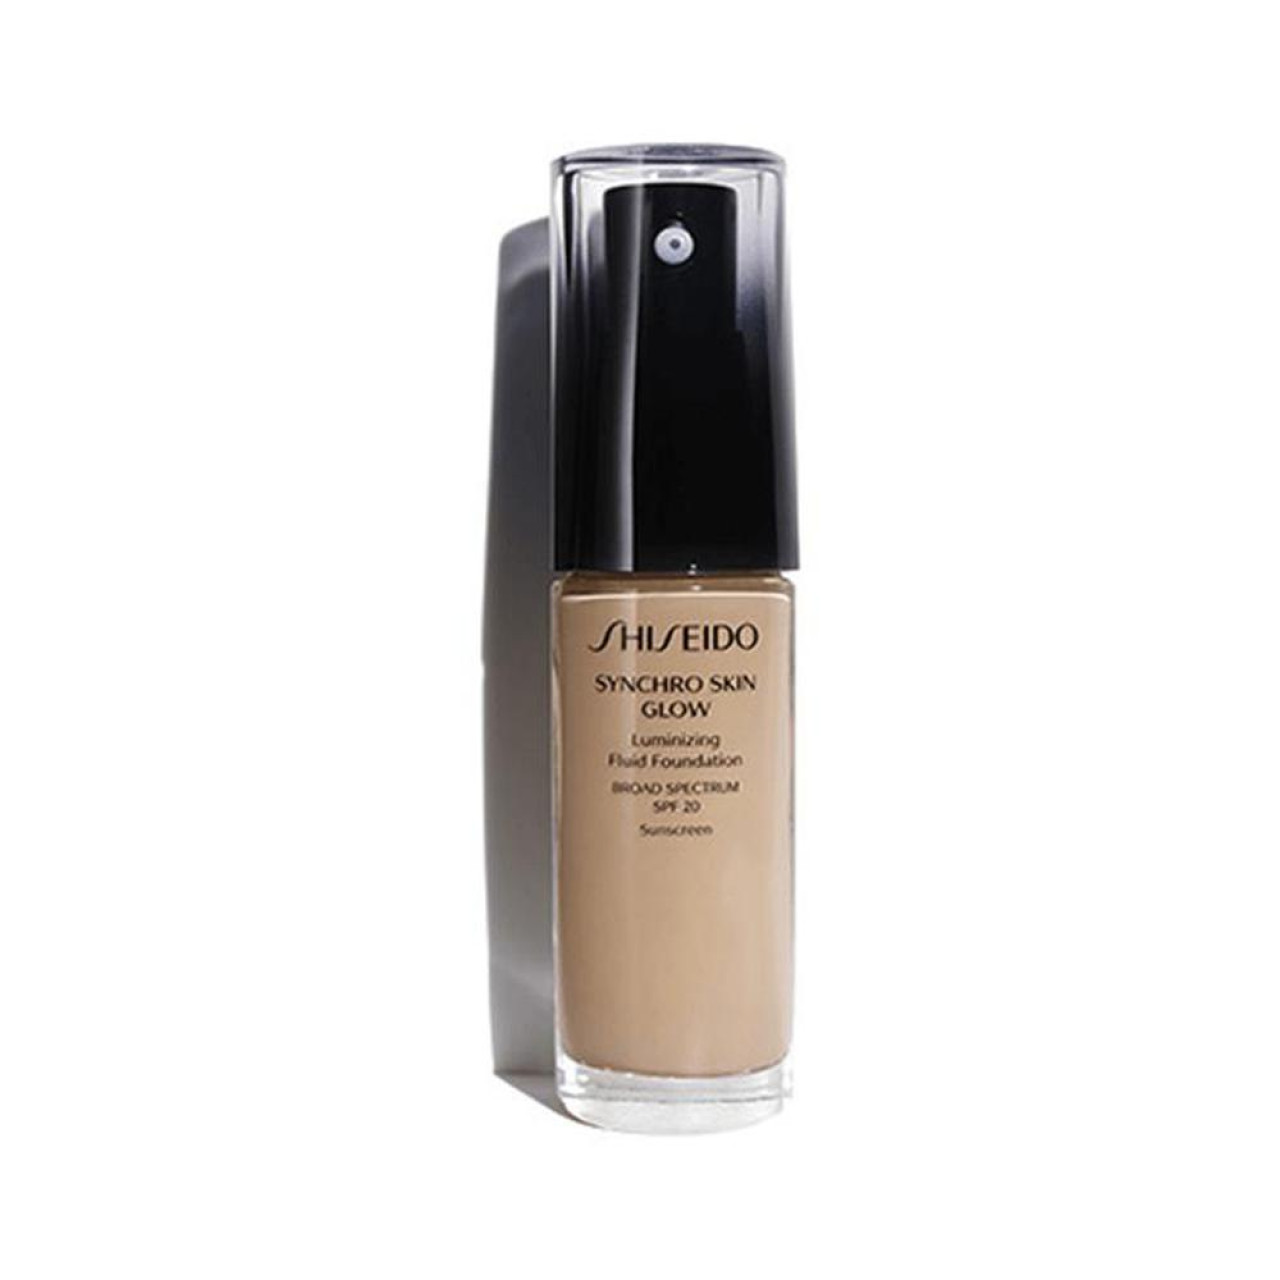 Shiseido synchro skin foundation Fond de Ten r4